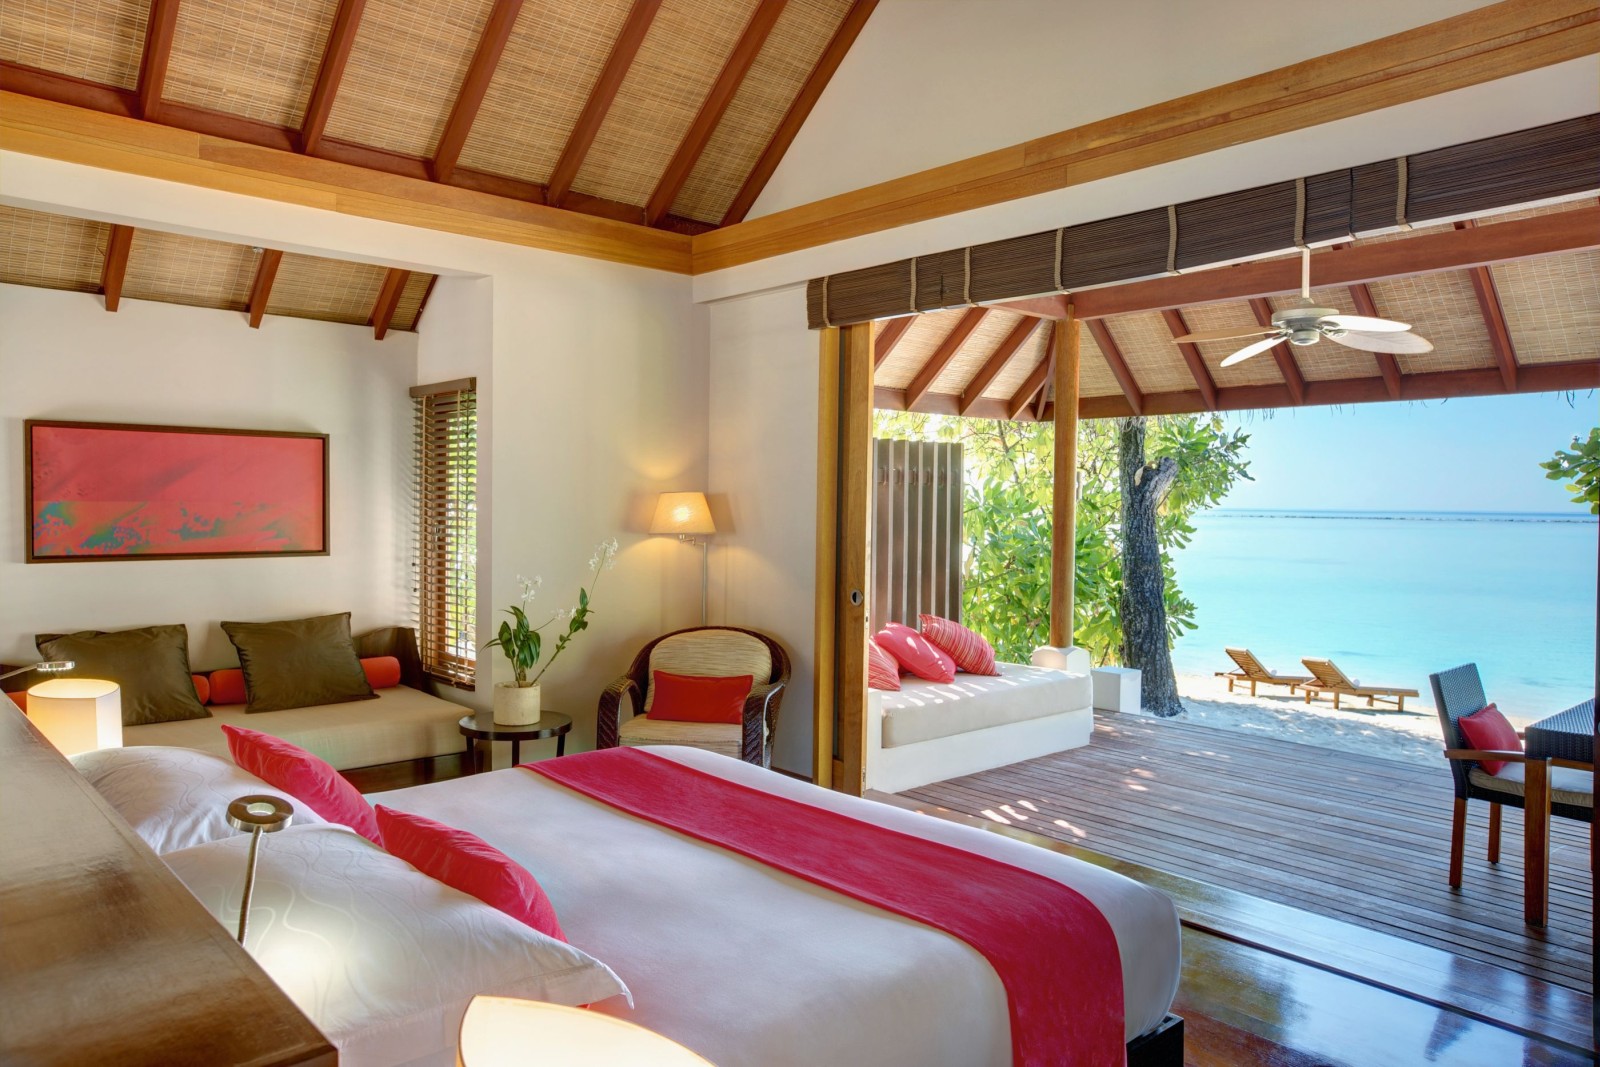 Double bedroom of a Beach Villa in LUX Maldives